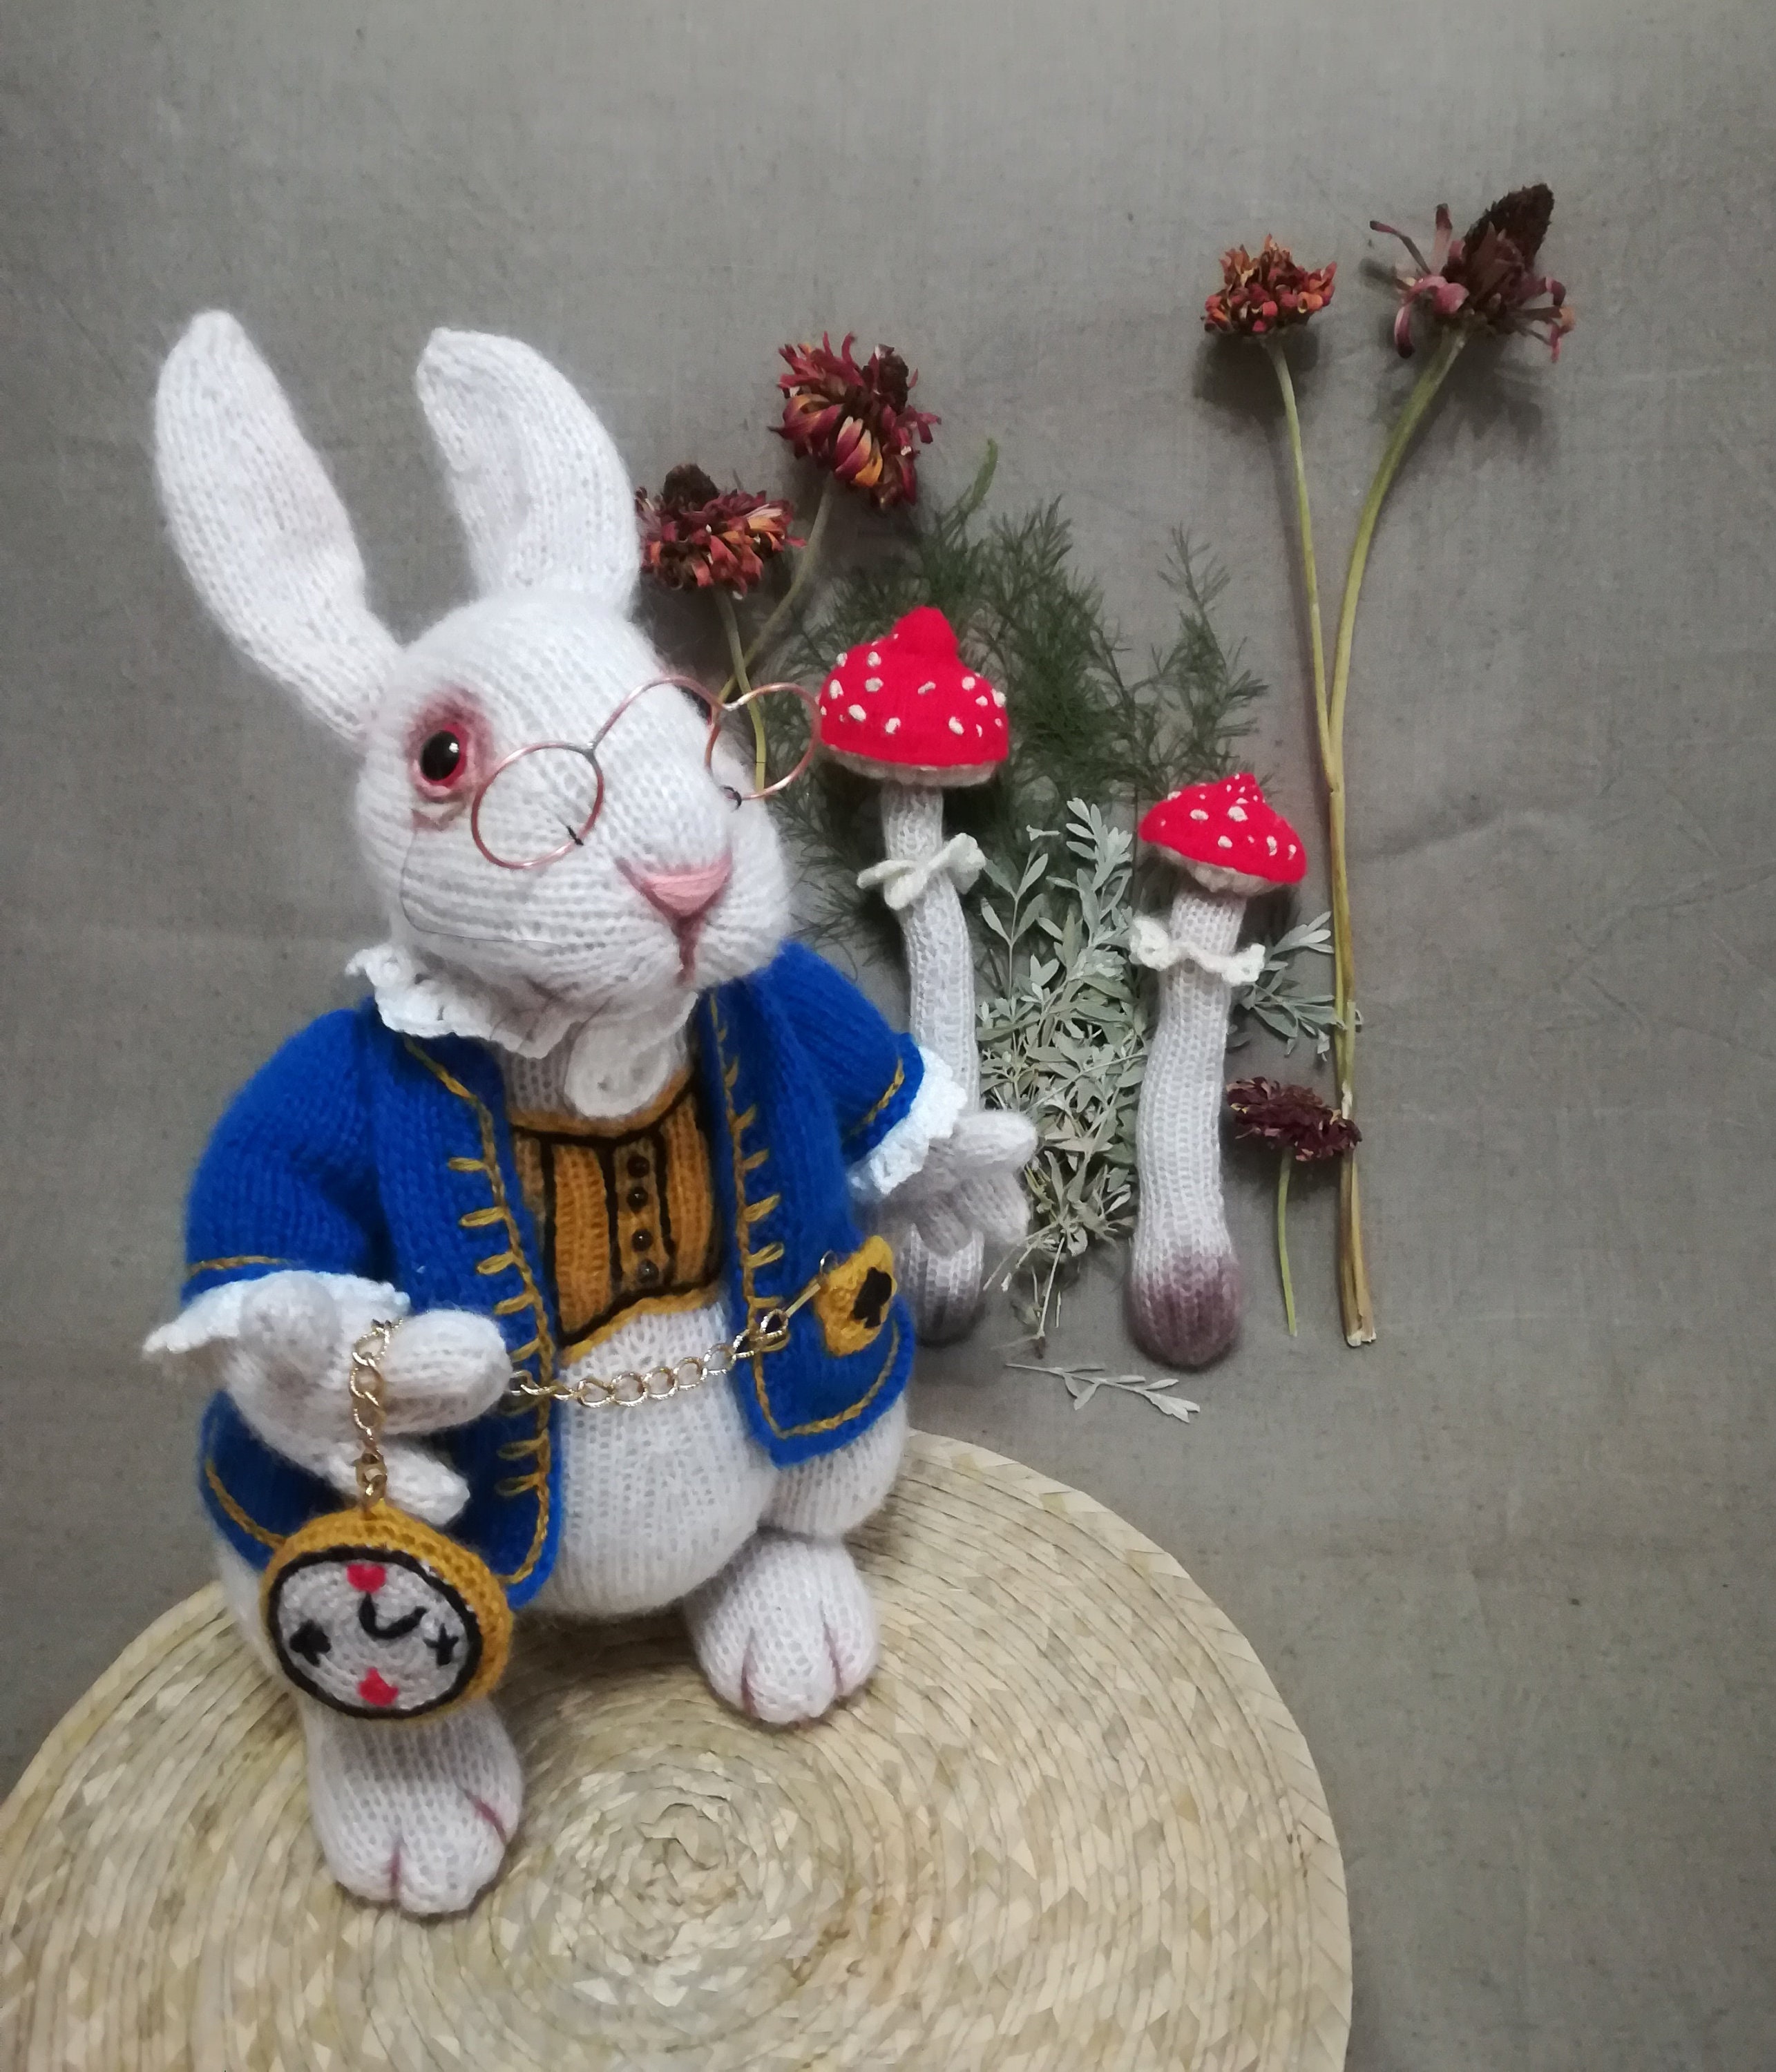 Disney Alice in Wonderland The White Rabbit Plush Toy Stuffed Dolls 35cm  High Quality Birthday Gifts For Children Toys